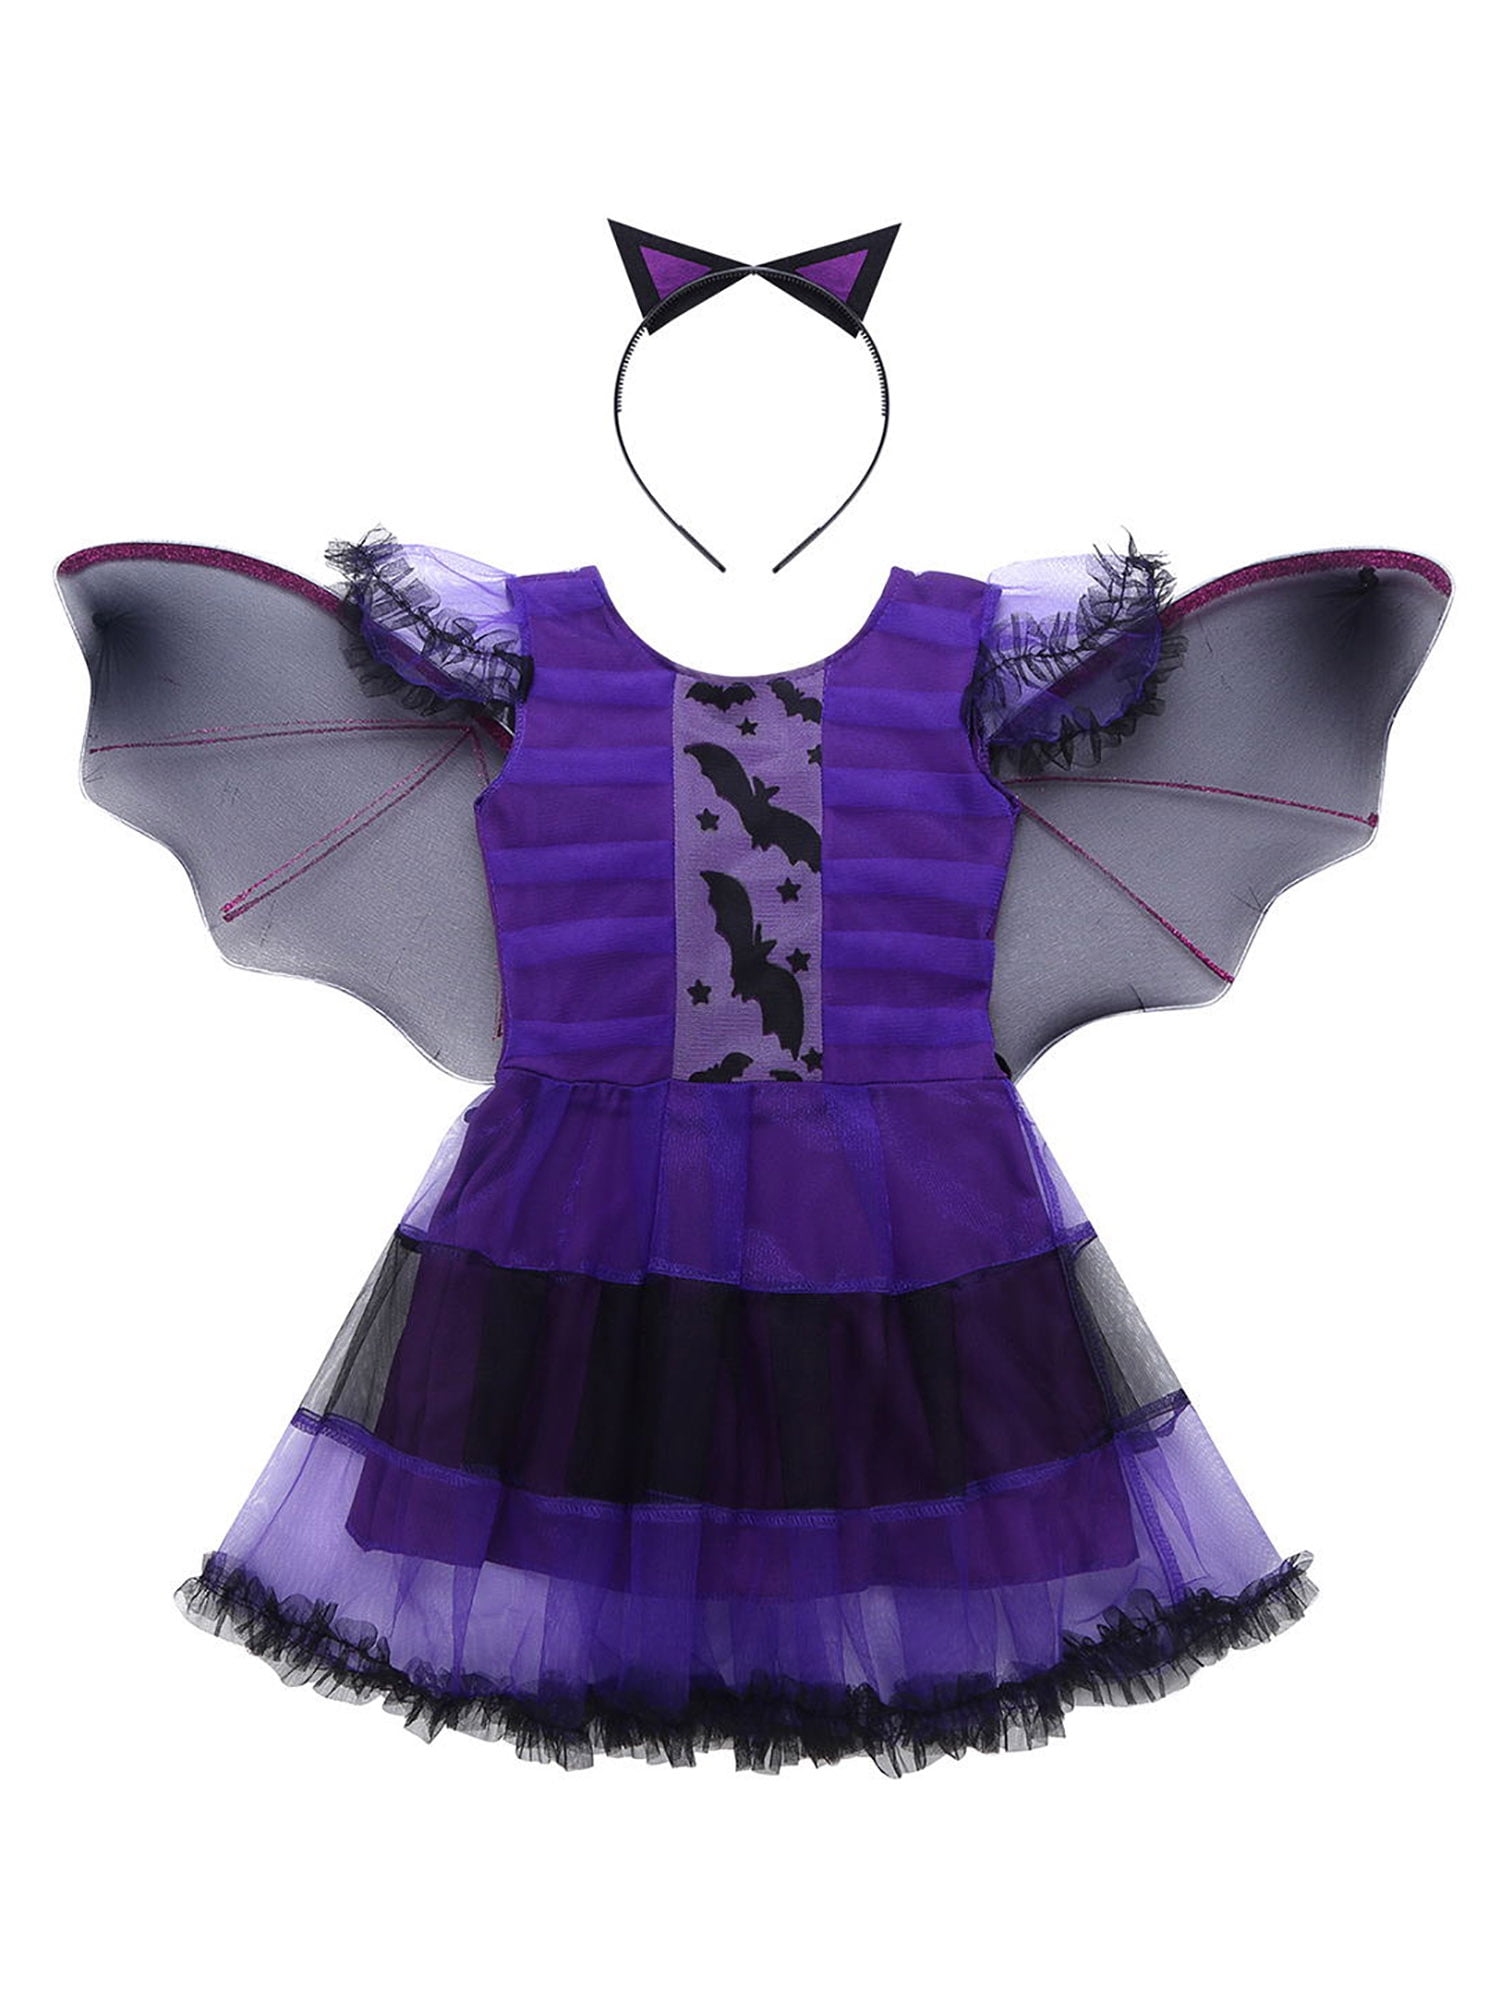 Kids Bat Jumpsuit Costume Halloween Boys Girls Fancy Dress Outfit Age 7-12 NEW 